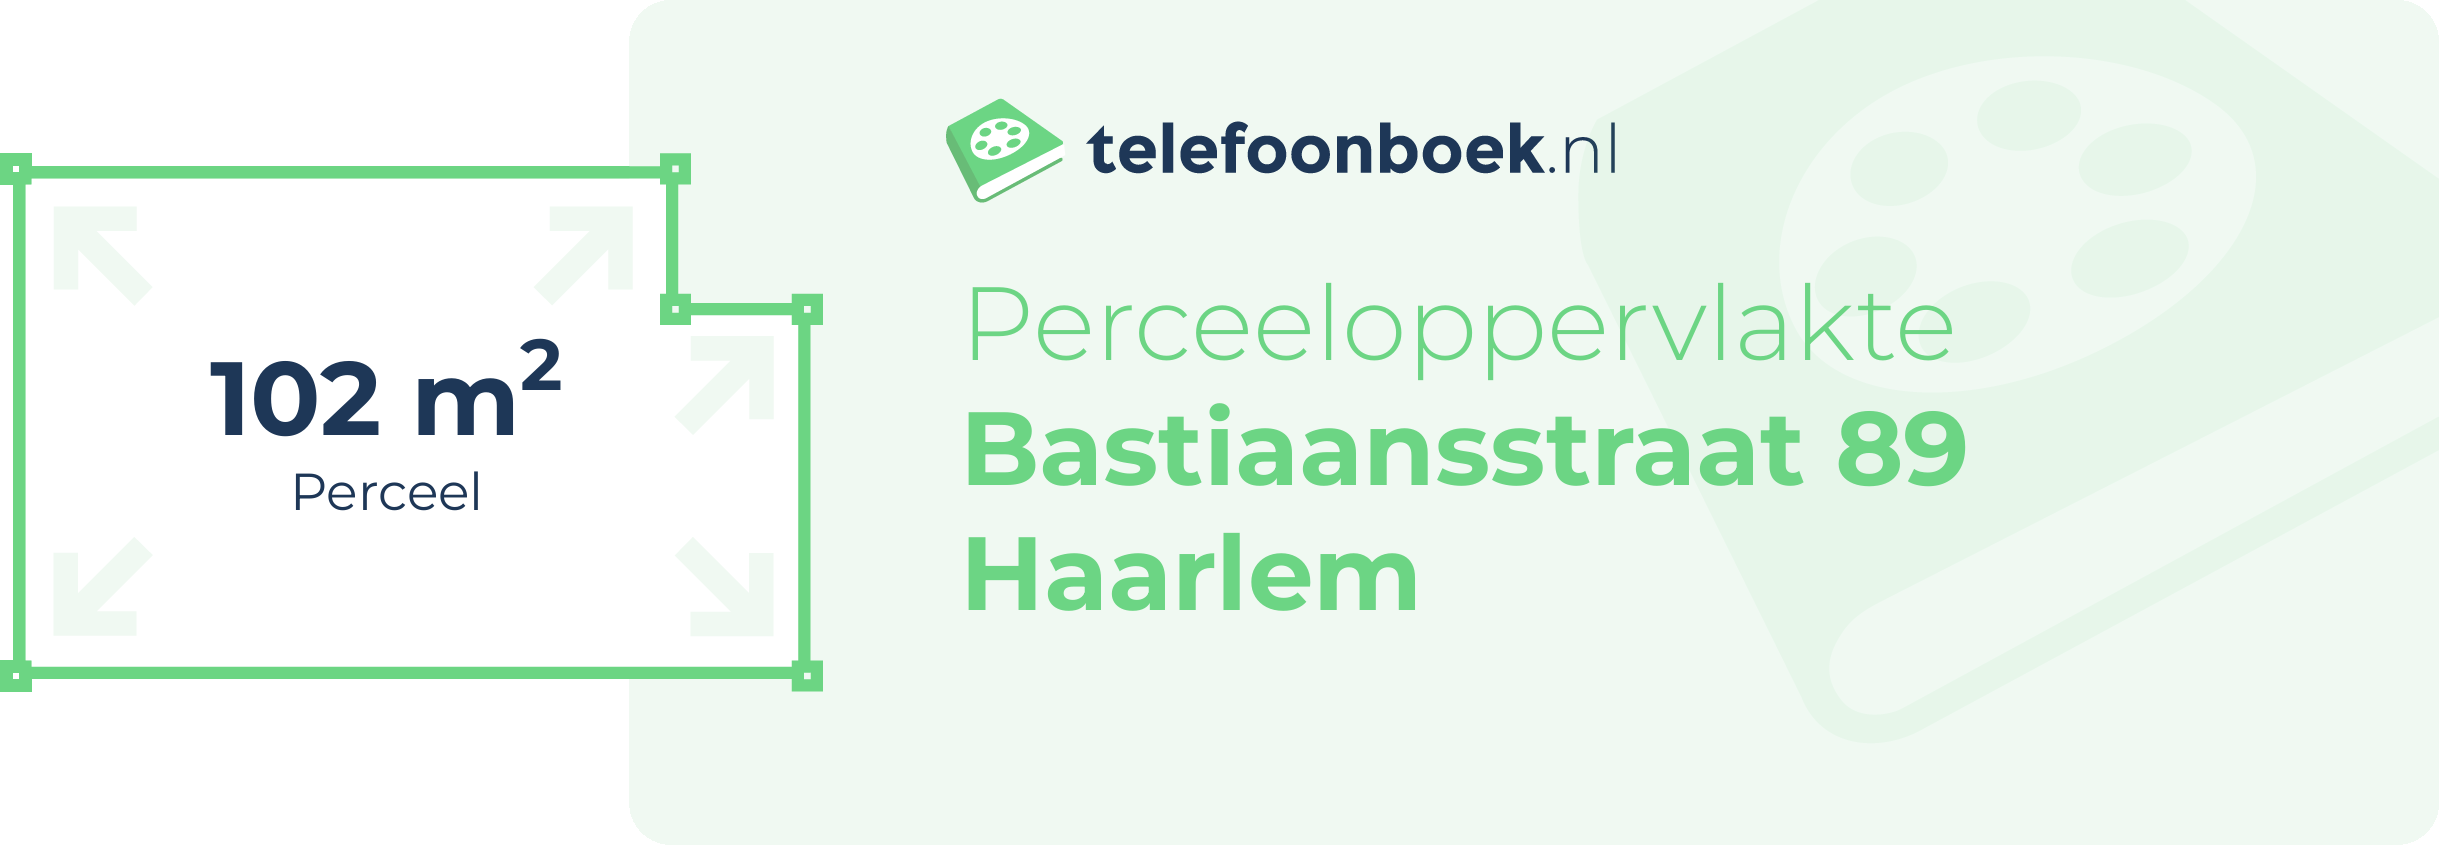 Perceeloppervlakte Bastiaansstraat 89 Haarlem